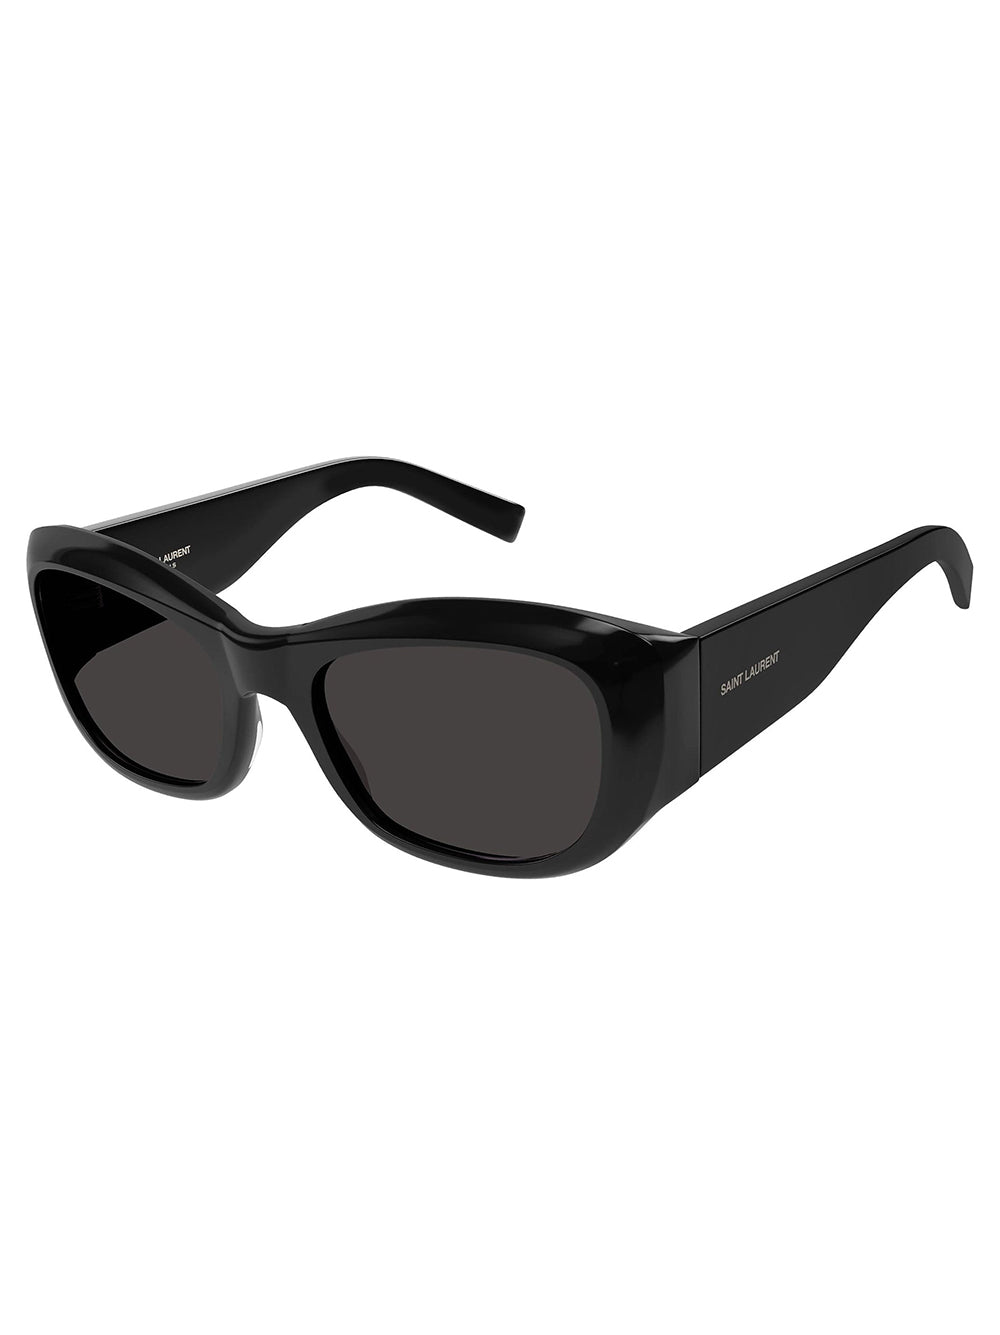 Saint Laurent Sunglasses SL 498-001 A/S 55